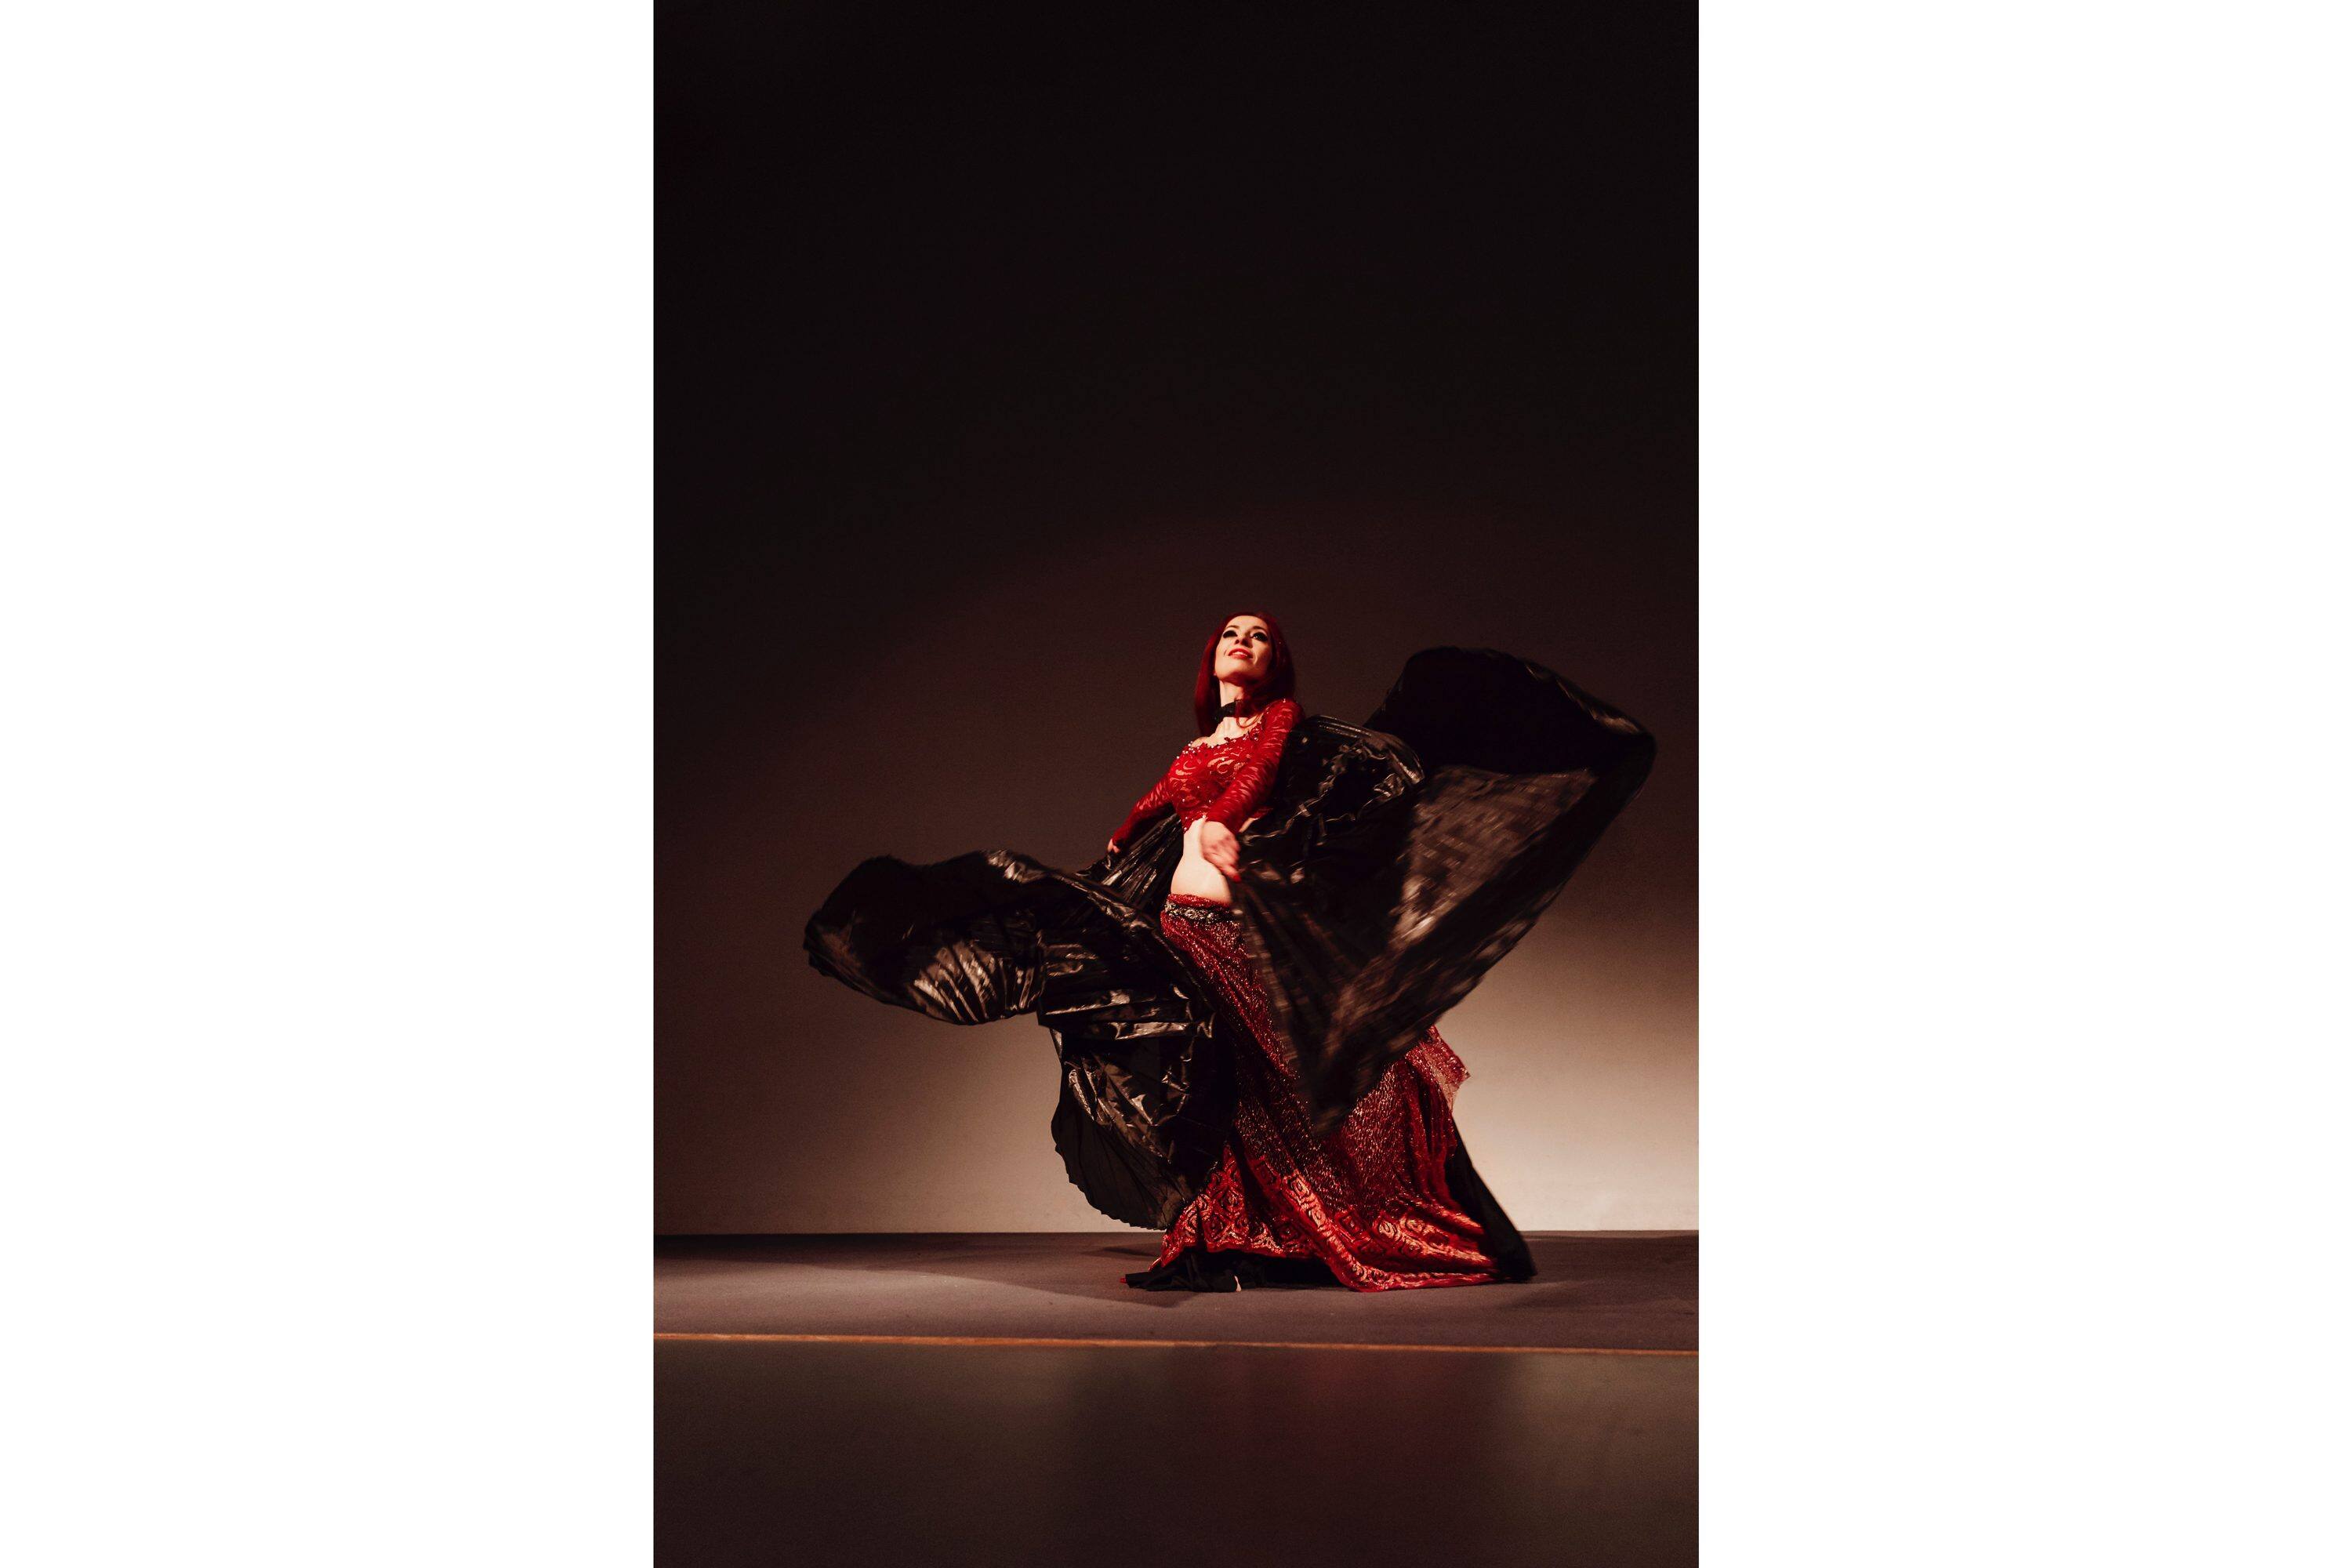 Flamenco dancer swirls on stage